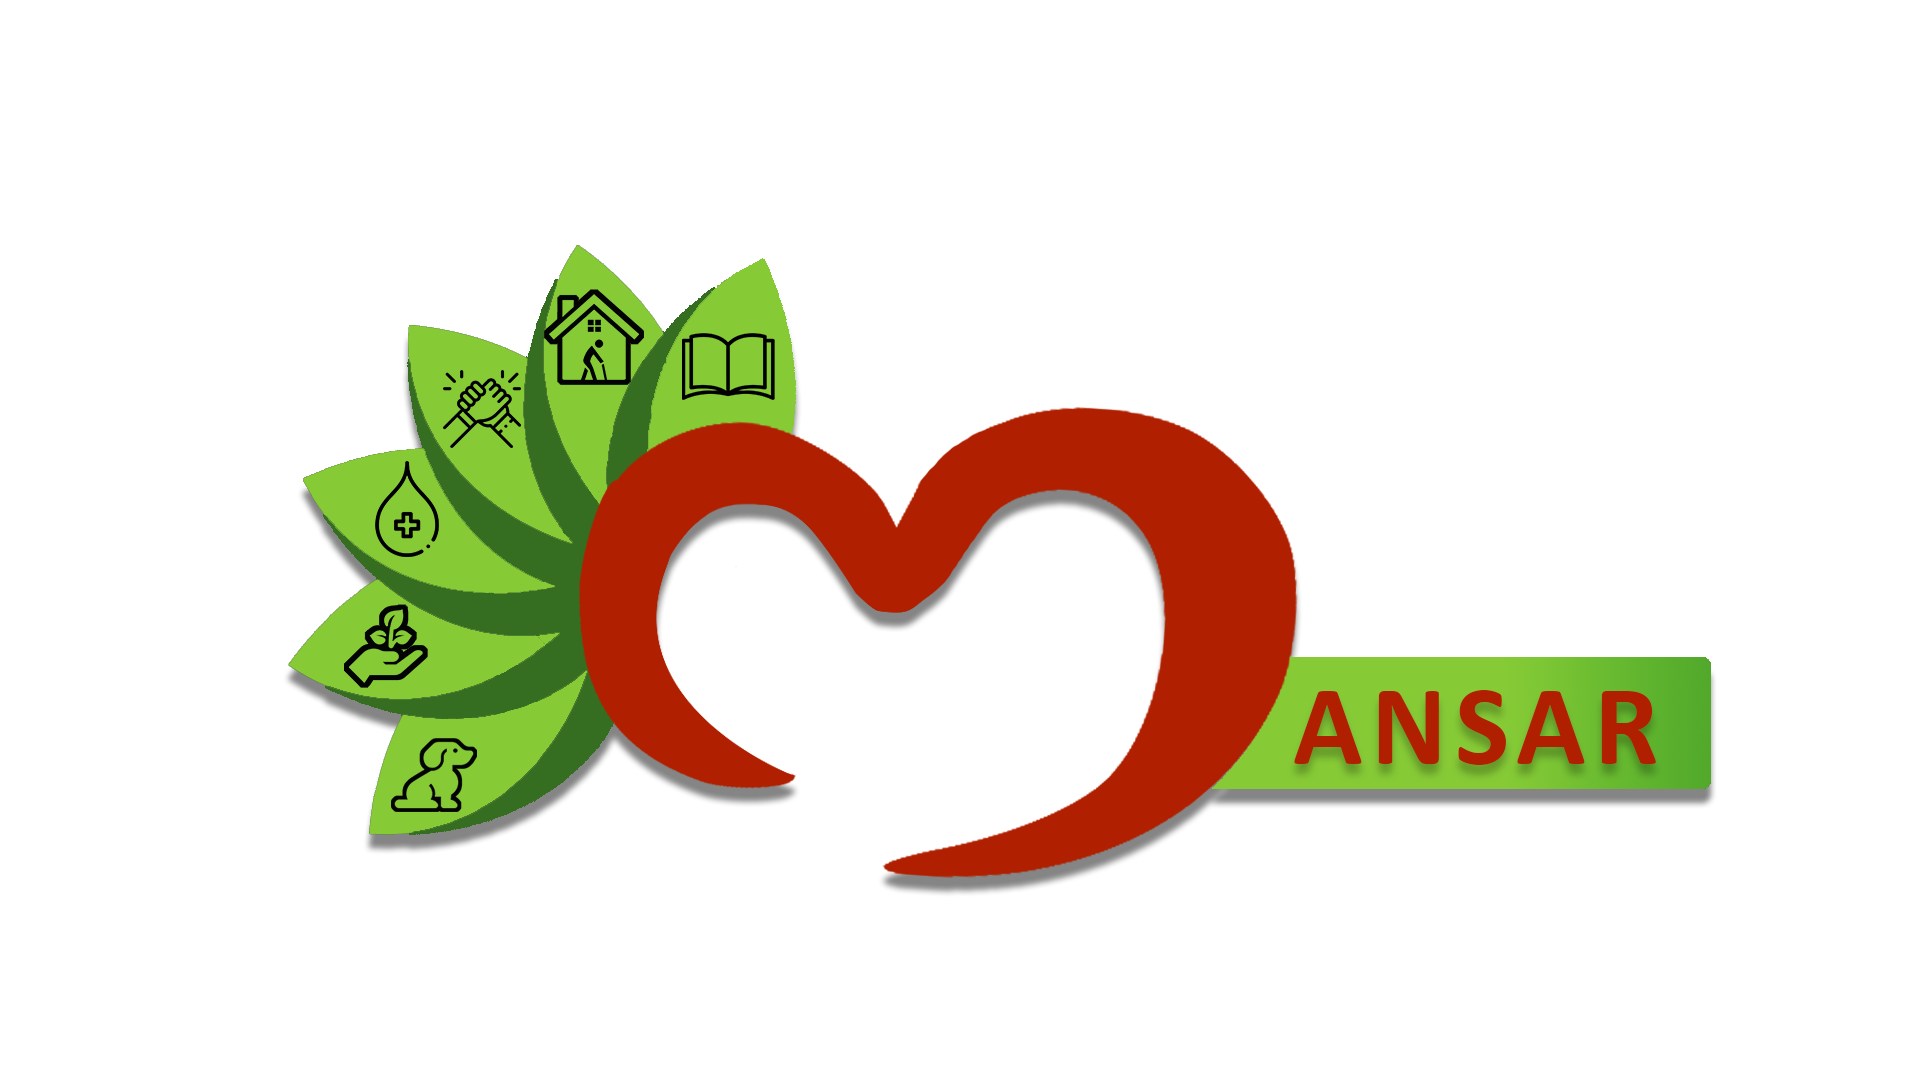 MANSAR logo PNG Format (1)